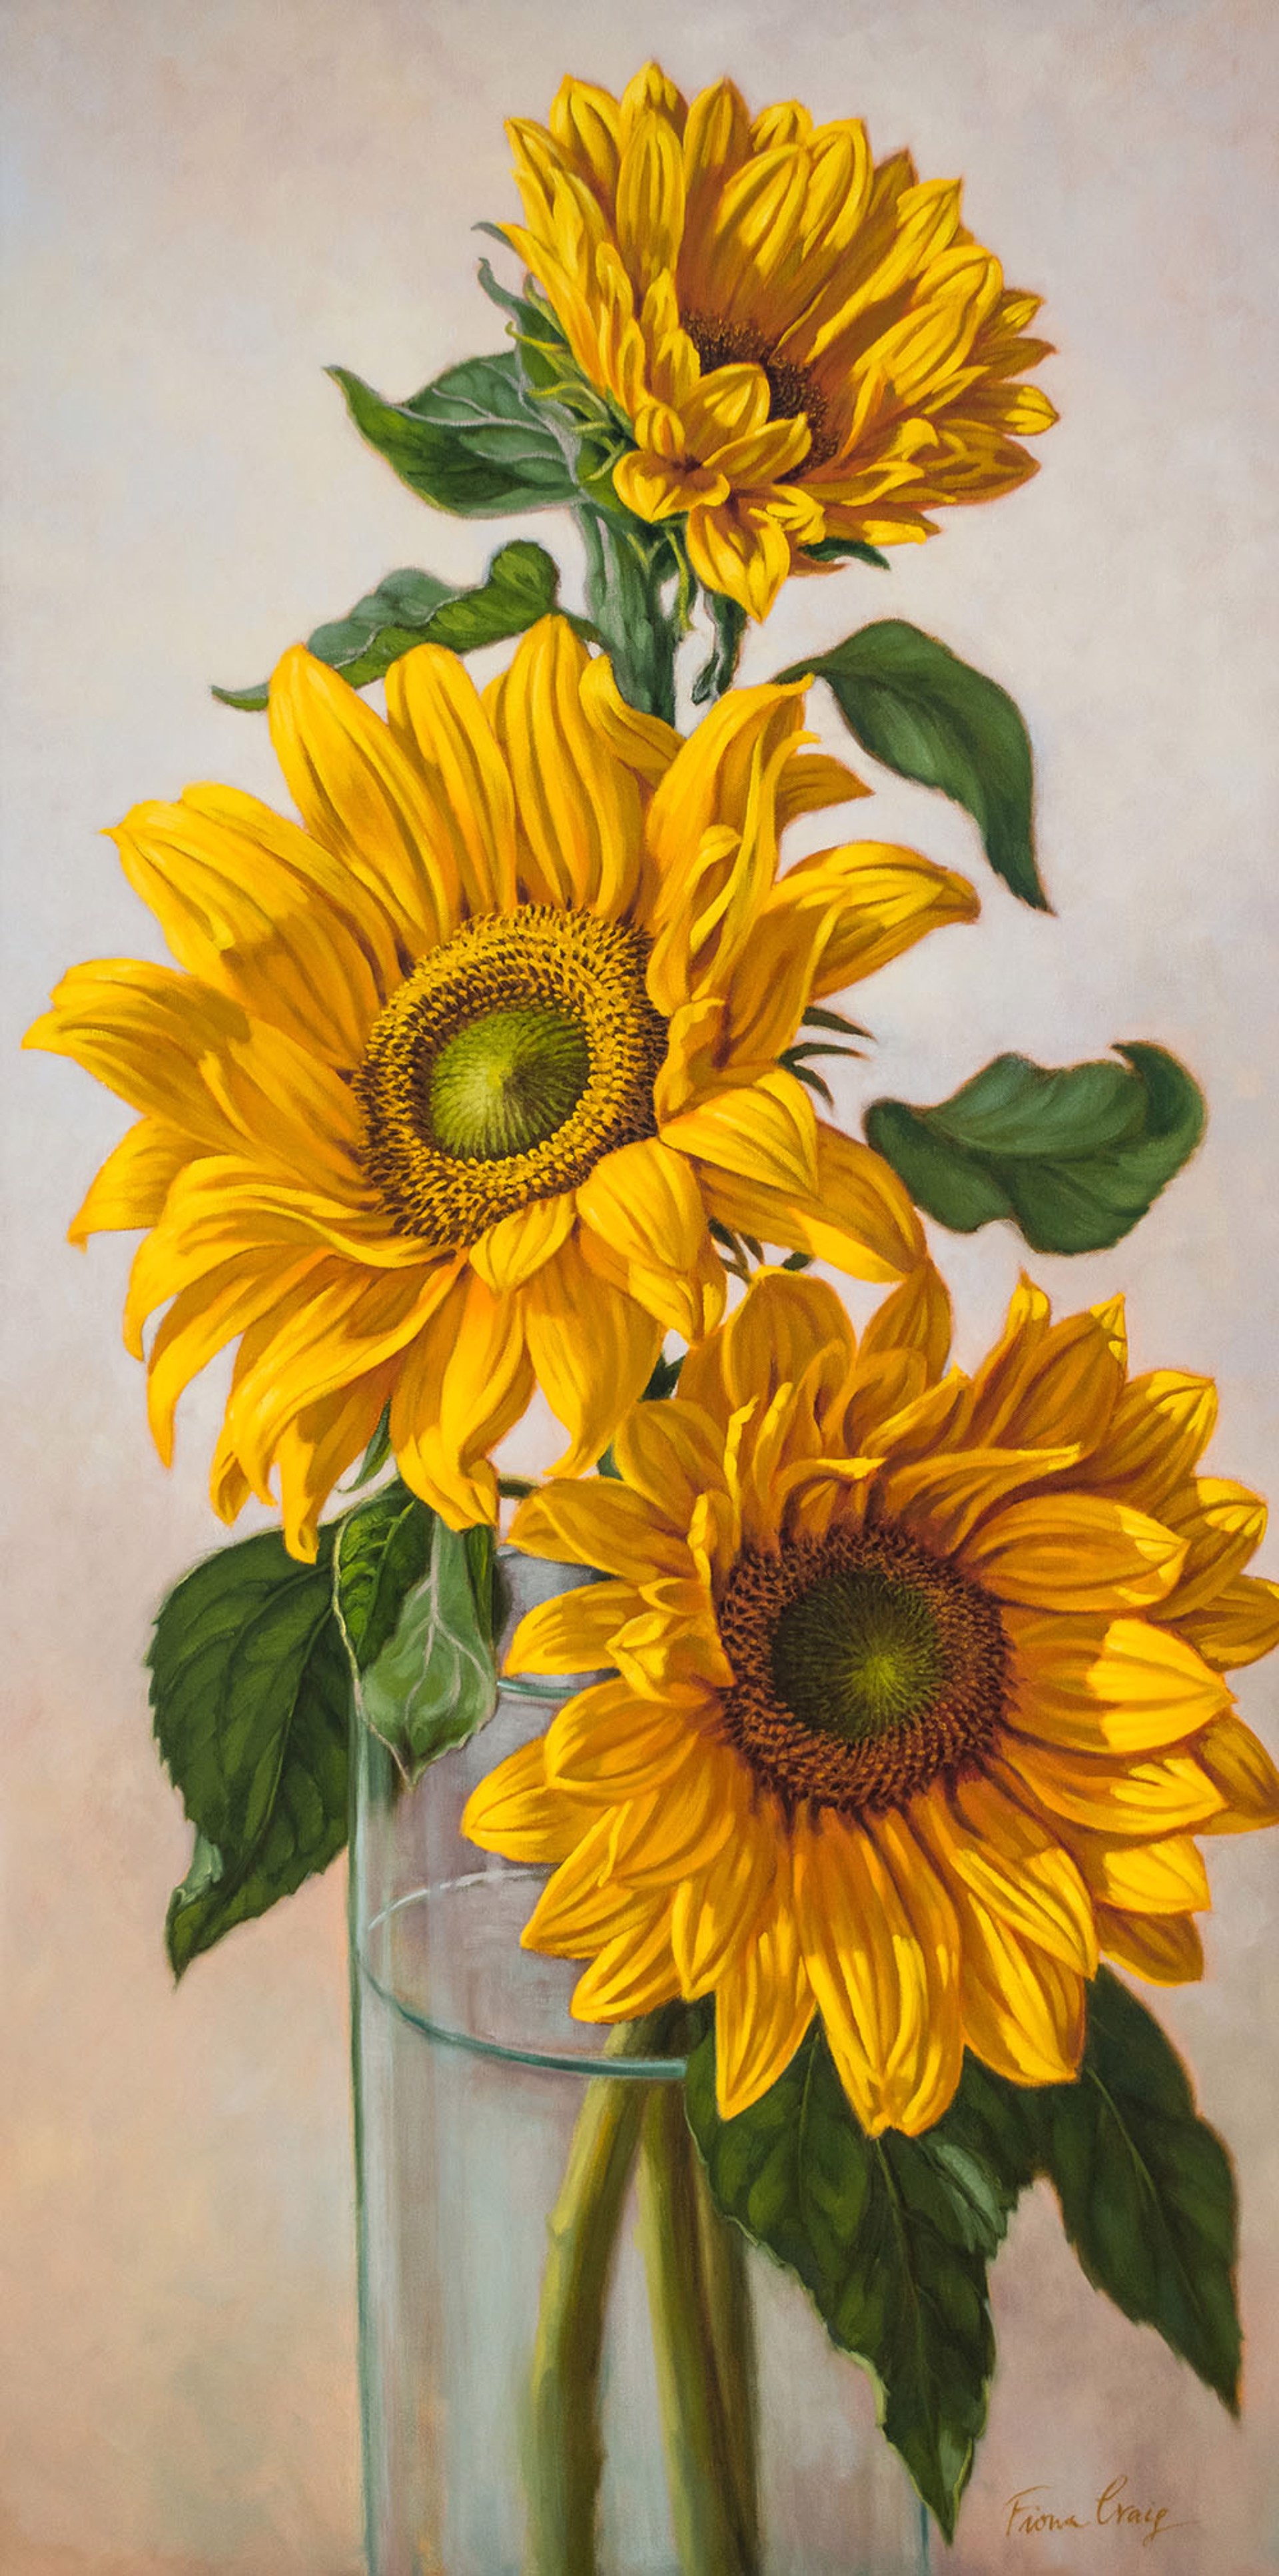 Sunflowers 1 by Fiona Craig